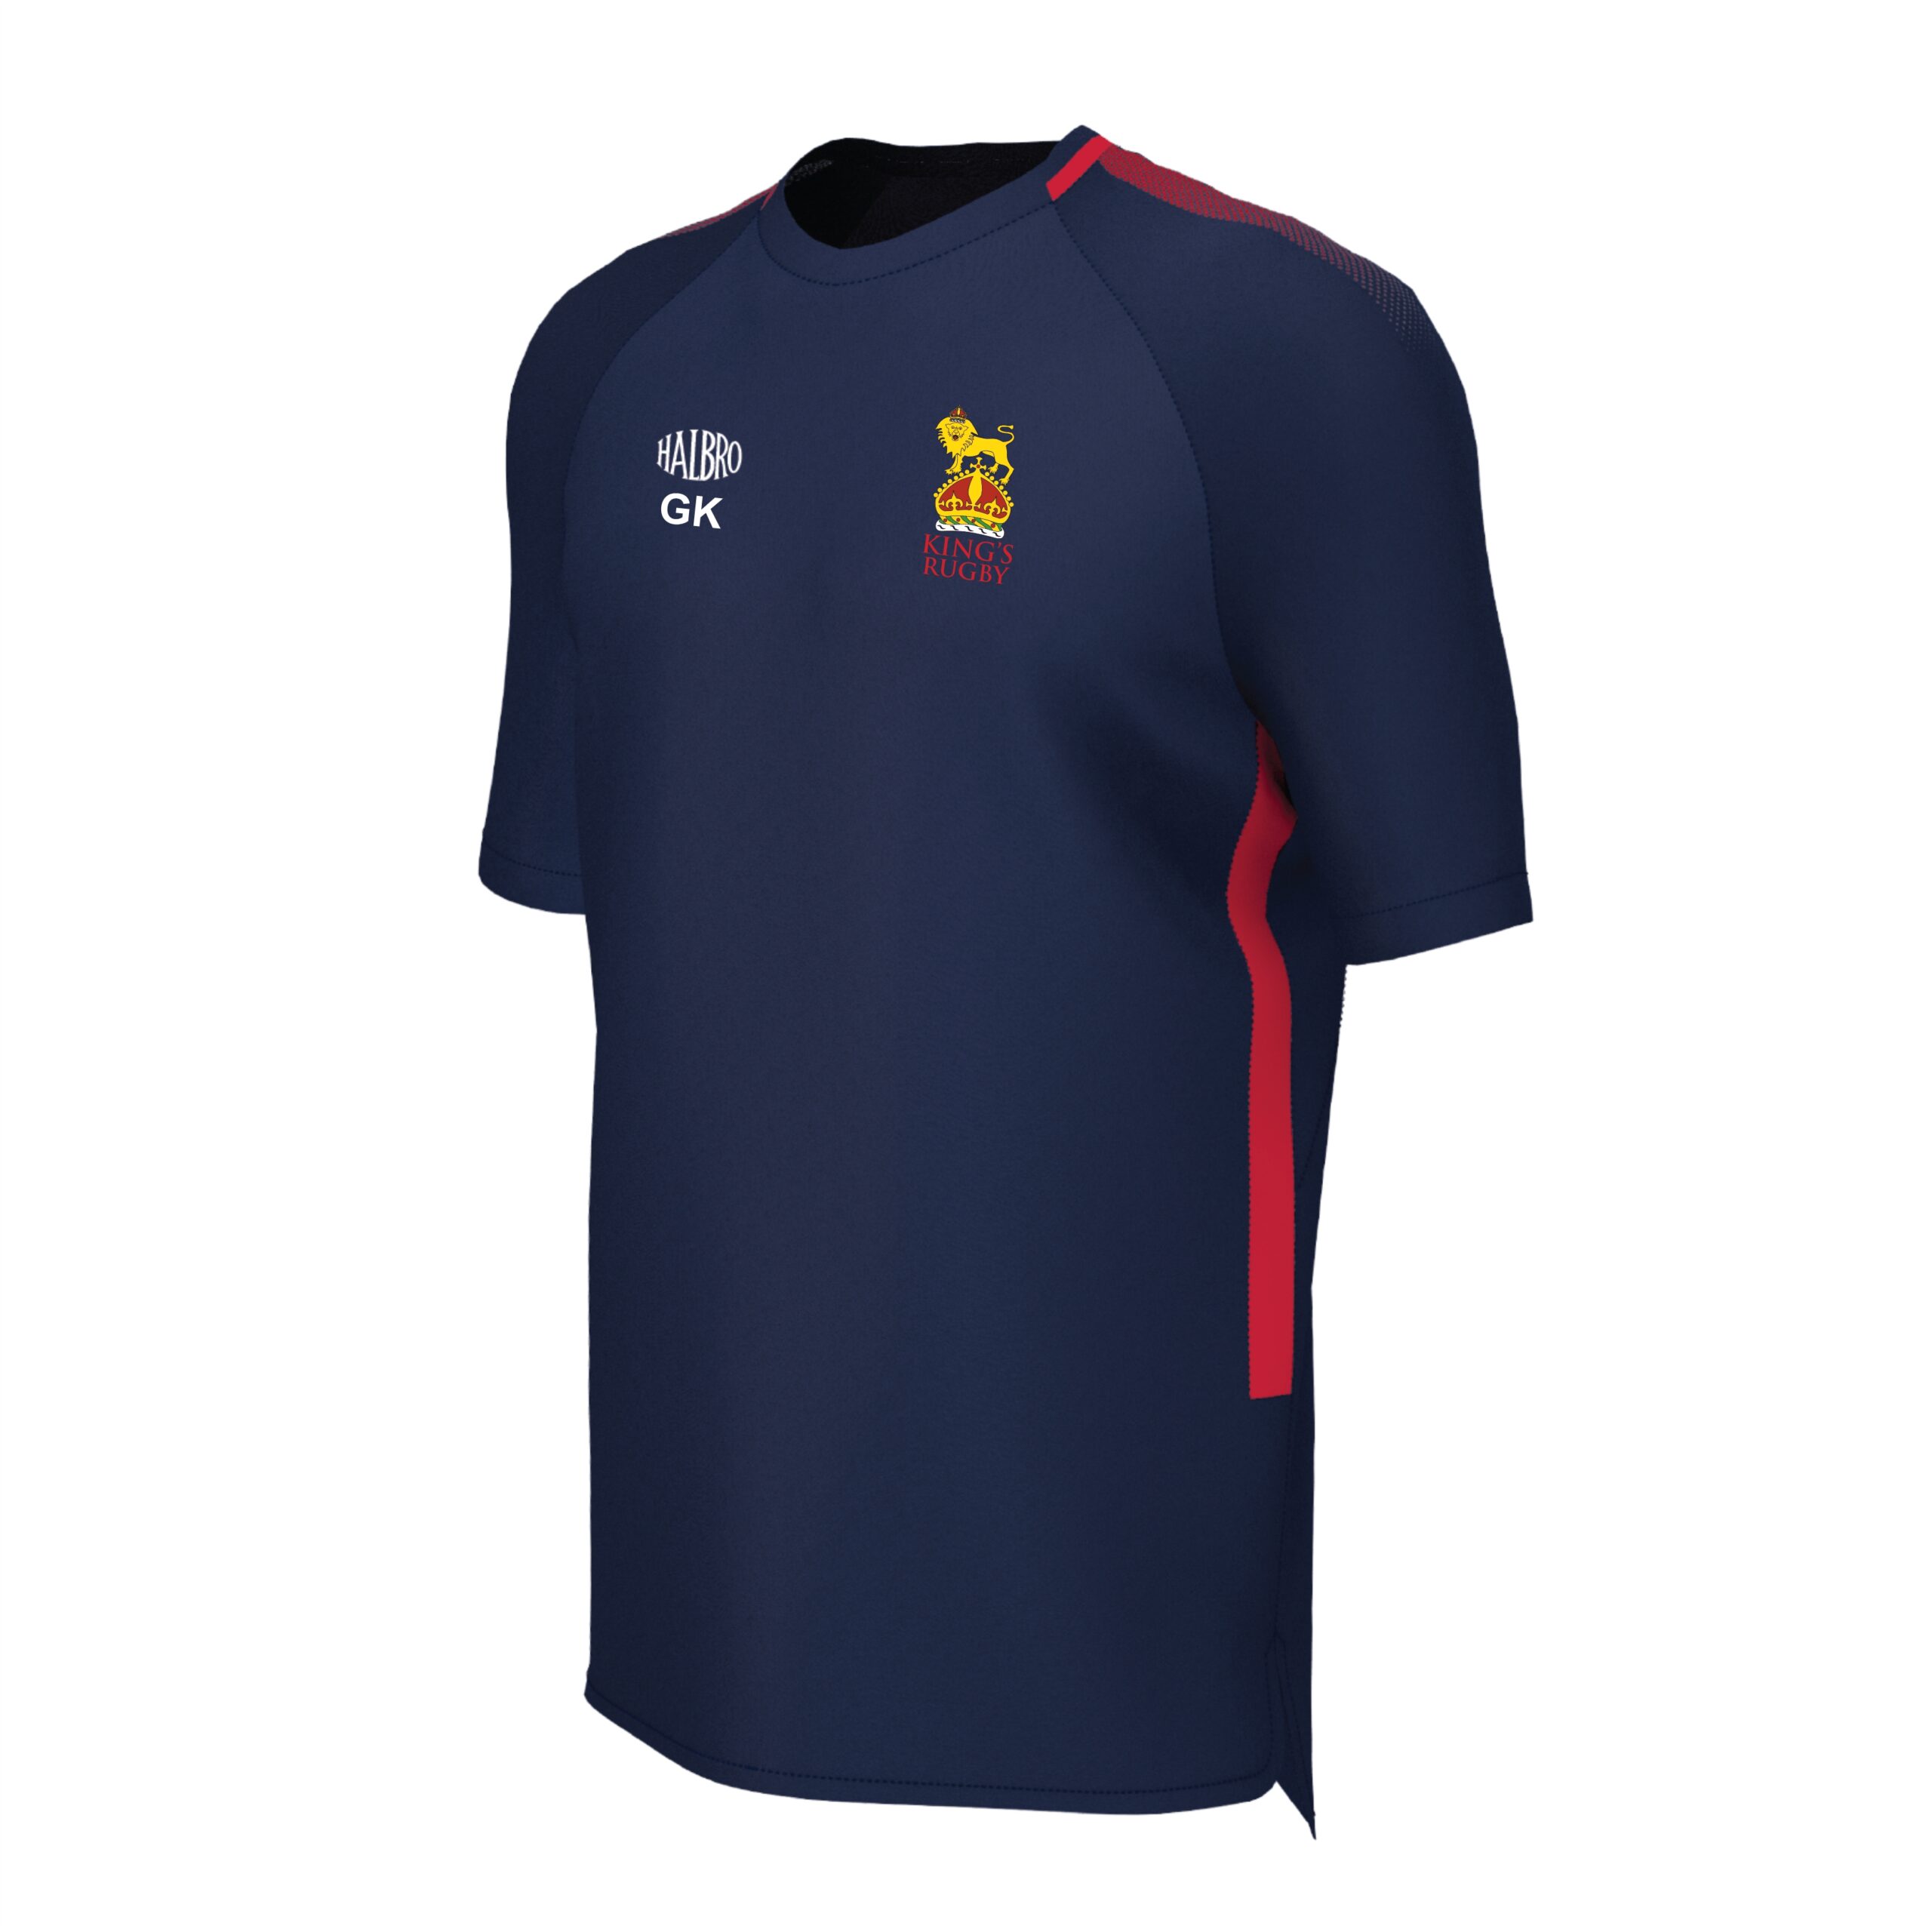 King's Rugby Juniors Cratus Tee - Halbro Sportswear Limited